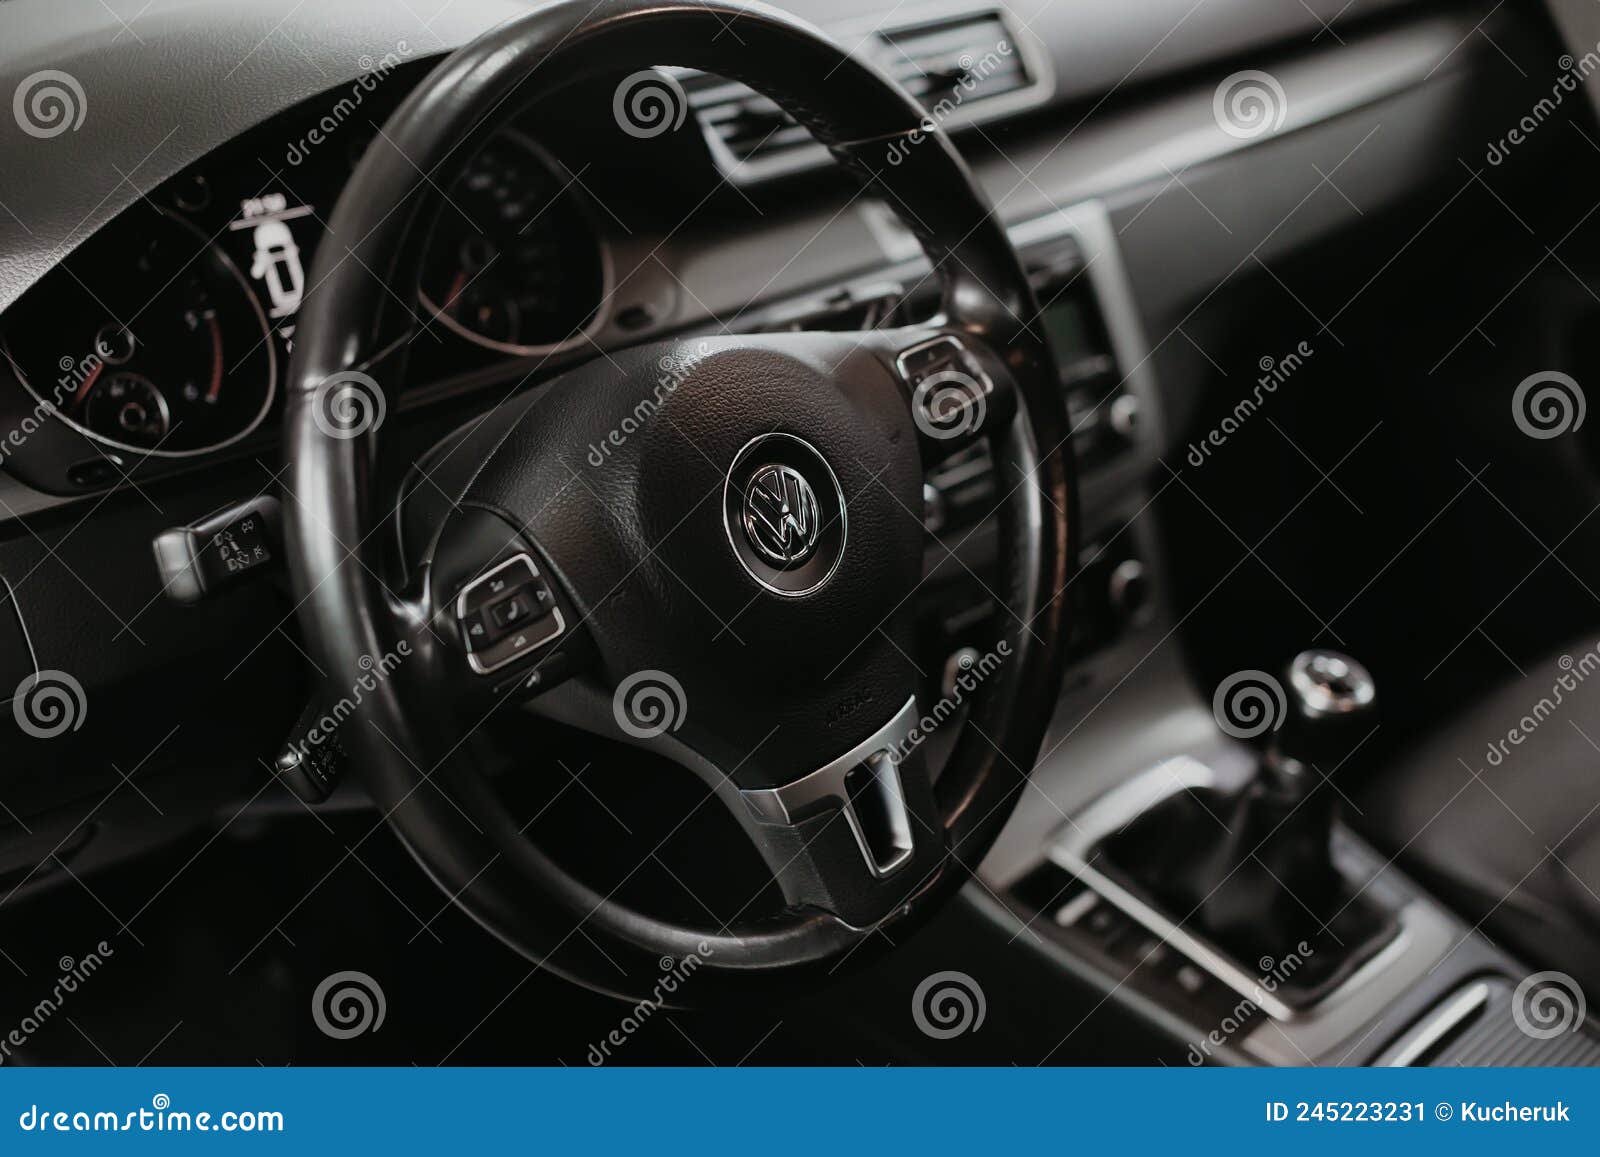 Volkswagen Passat B7, Logo on the Steering Wheel Editorial Photo - Image of  volkswagen, transportation: 245223231